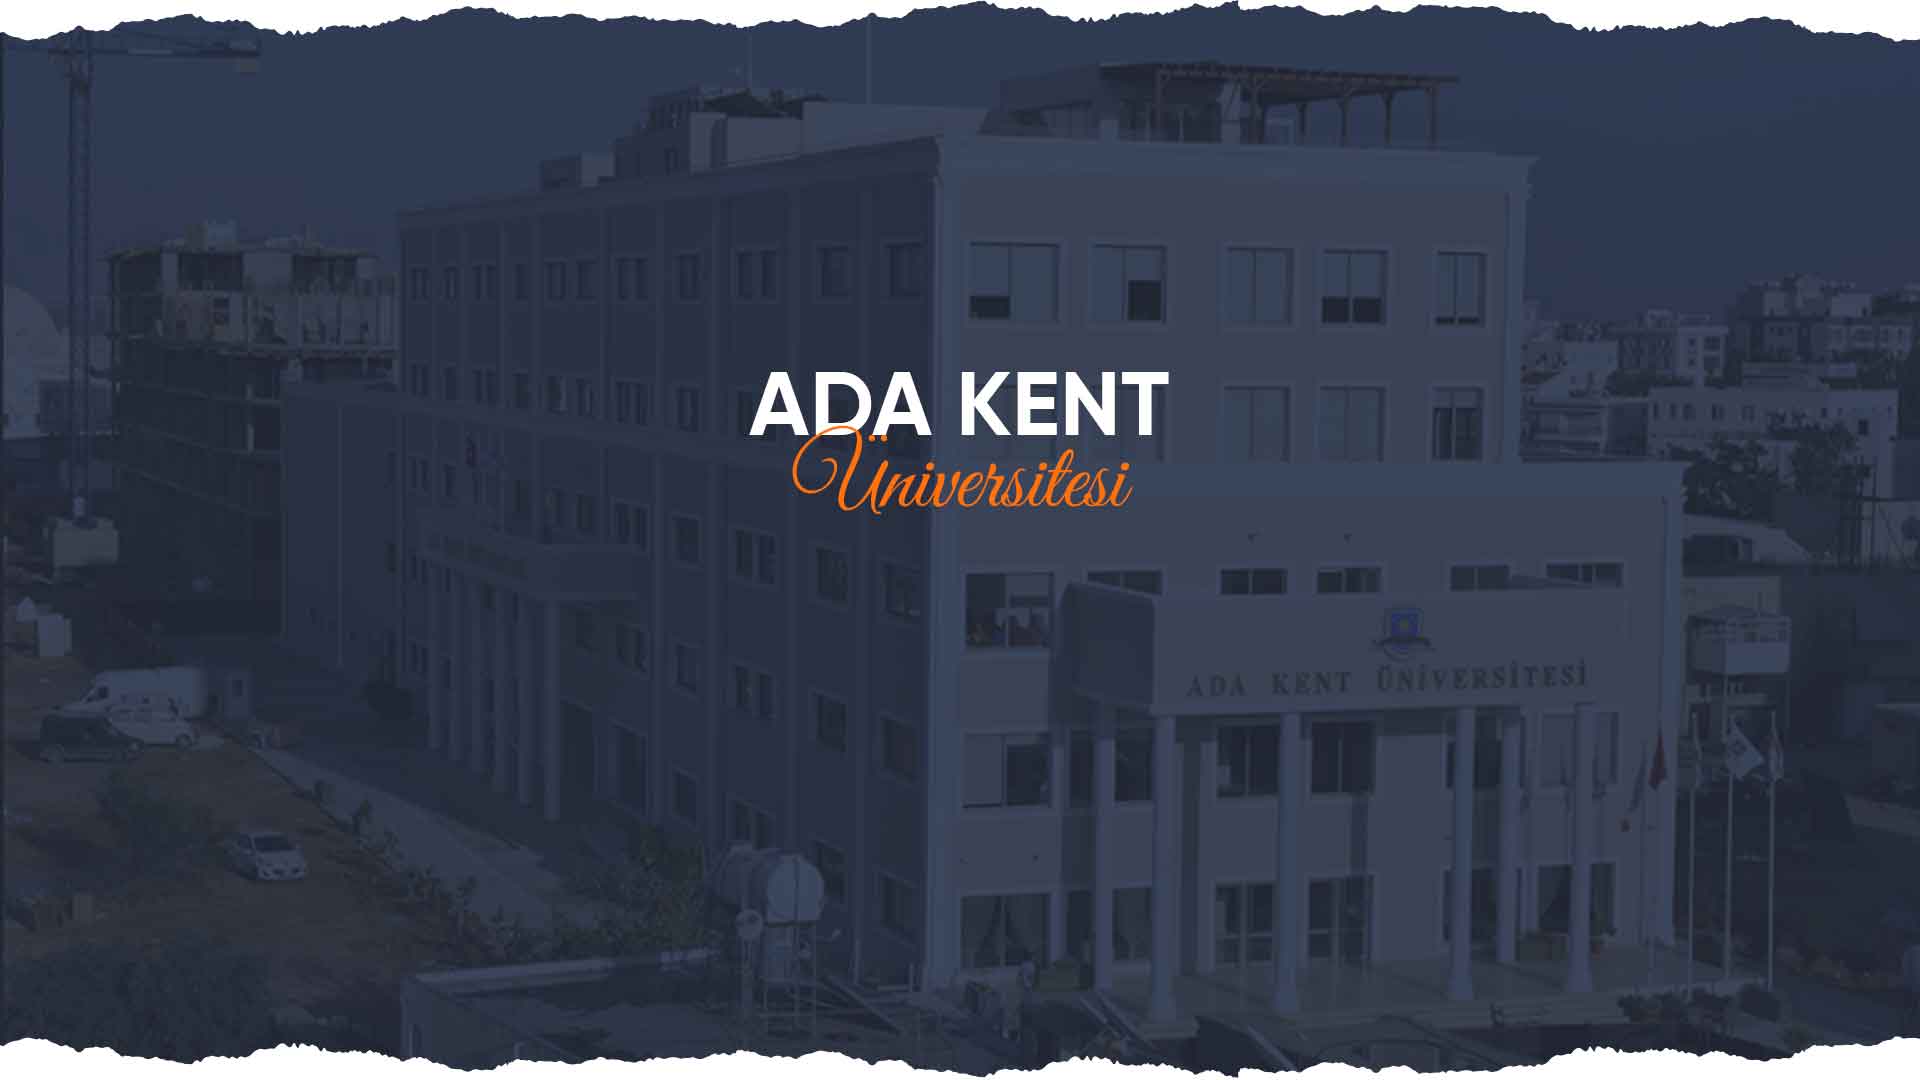 Adakent university